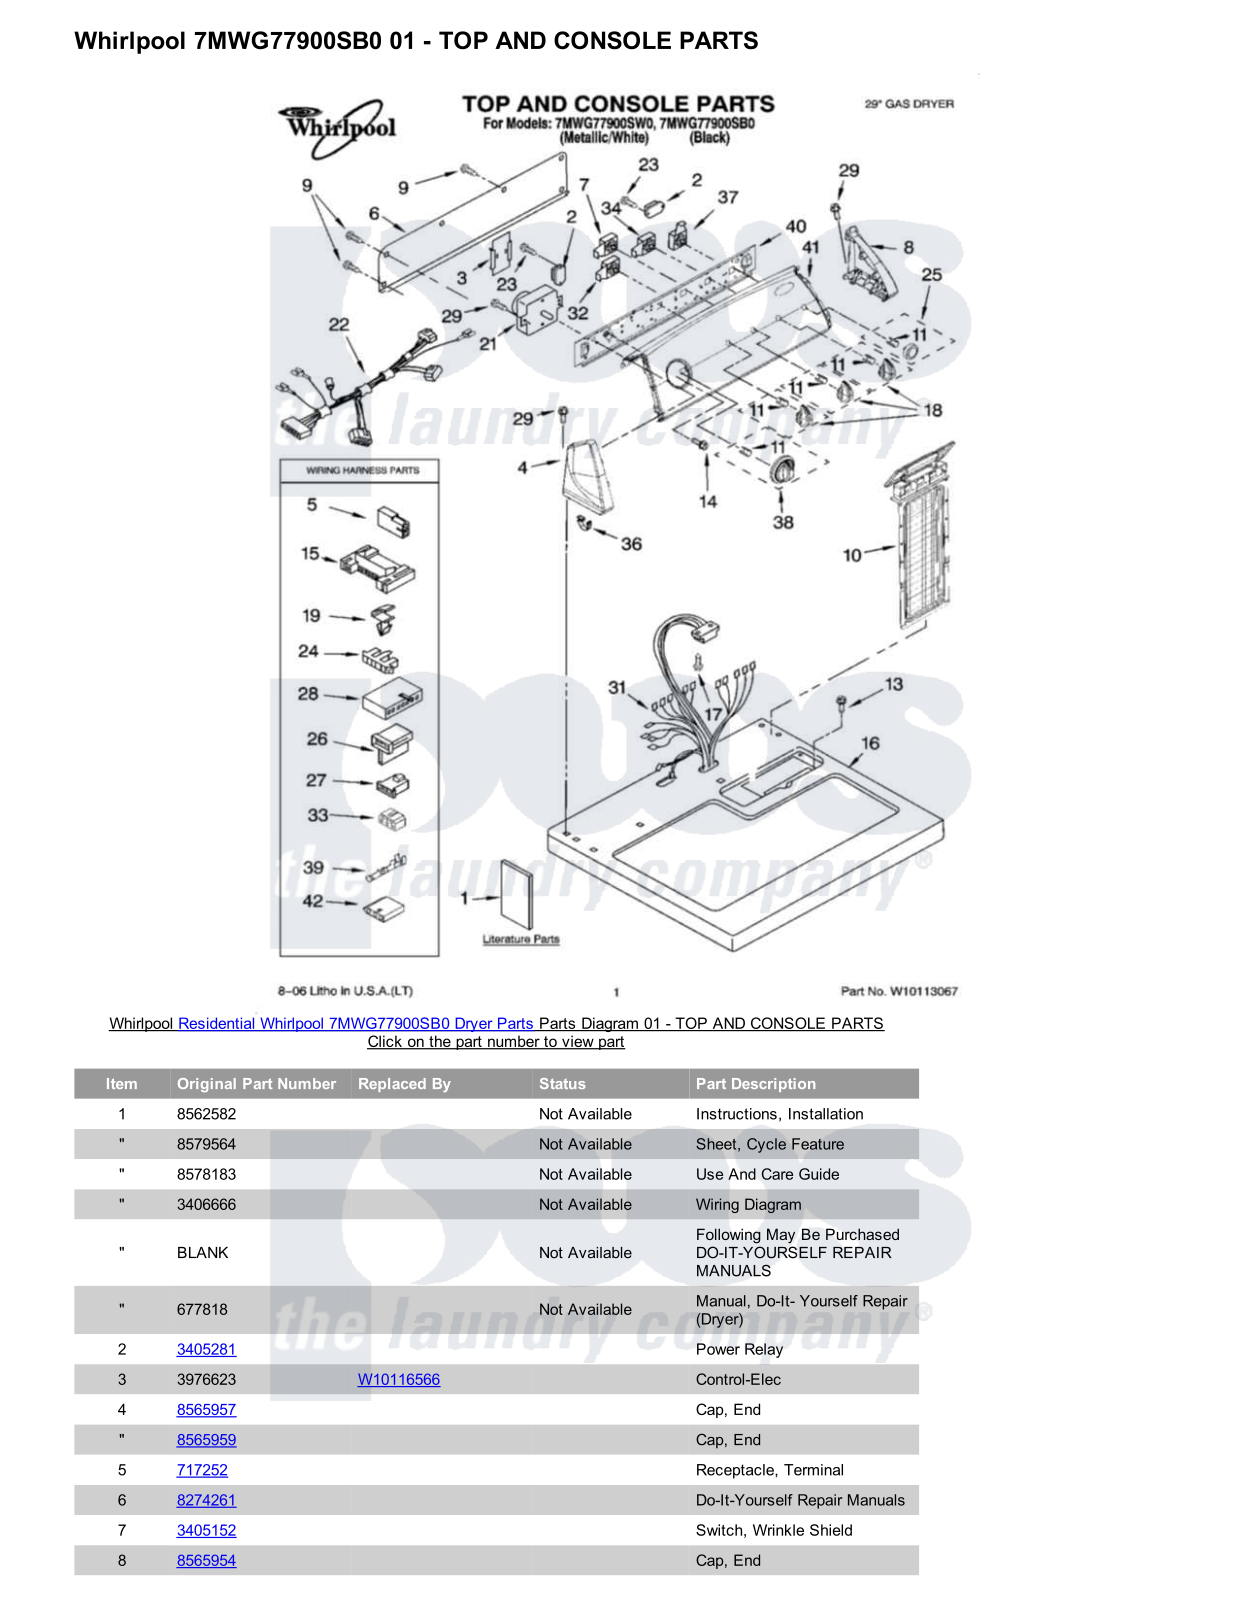 Whirlpool 7MWG77900SB0 Parts Diagram